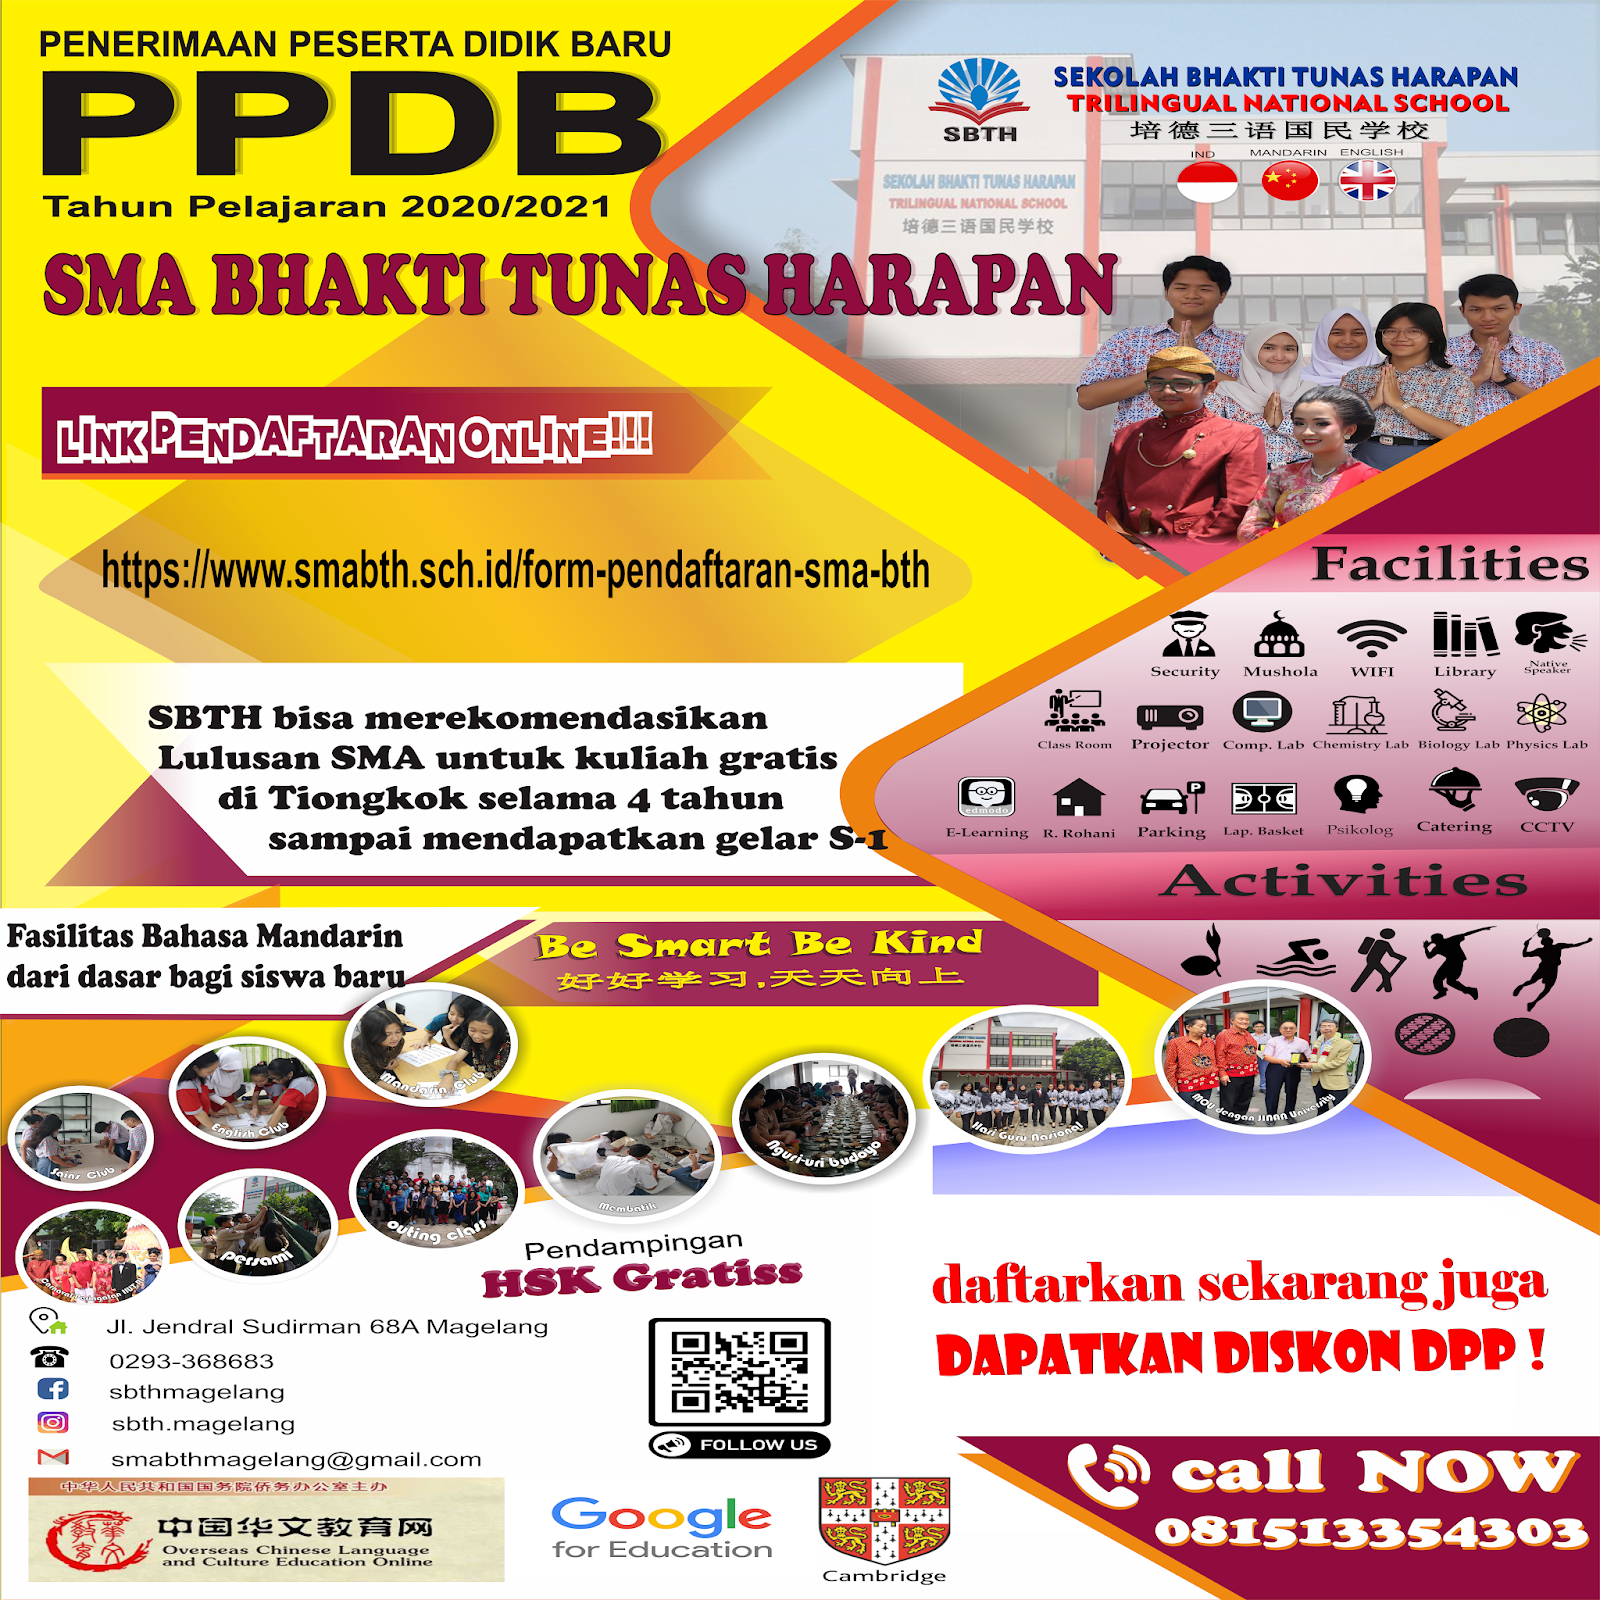 Ppdb Sma Bhakti Tunas Harapan Tp 20202021